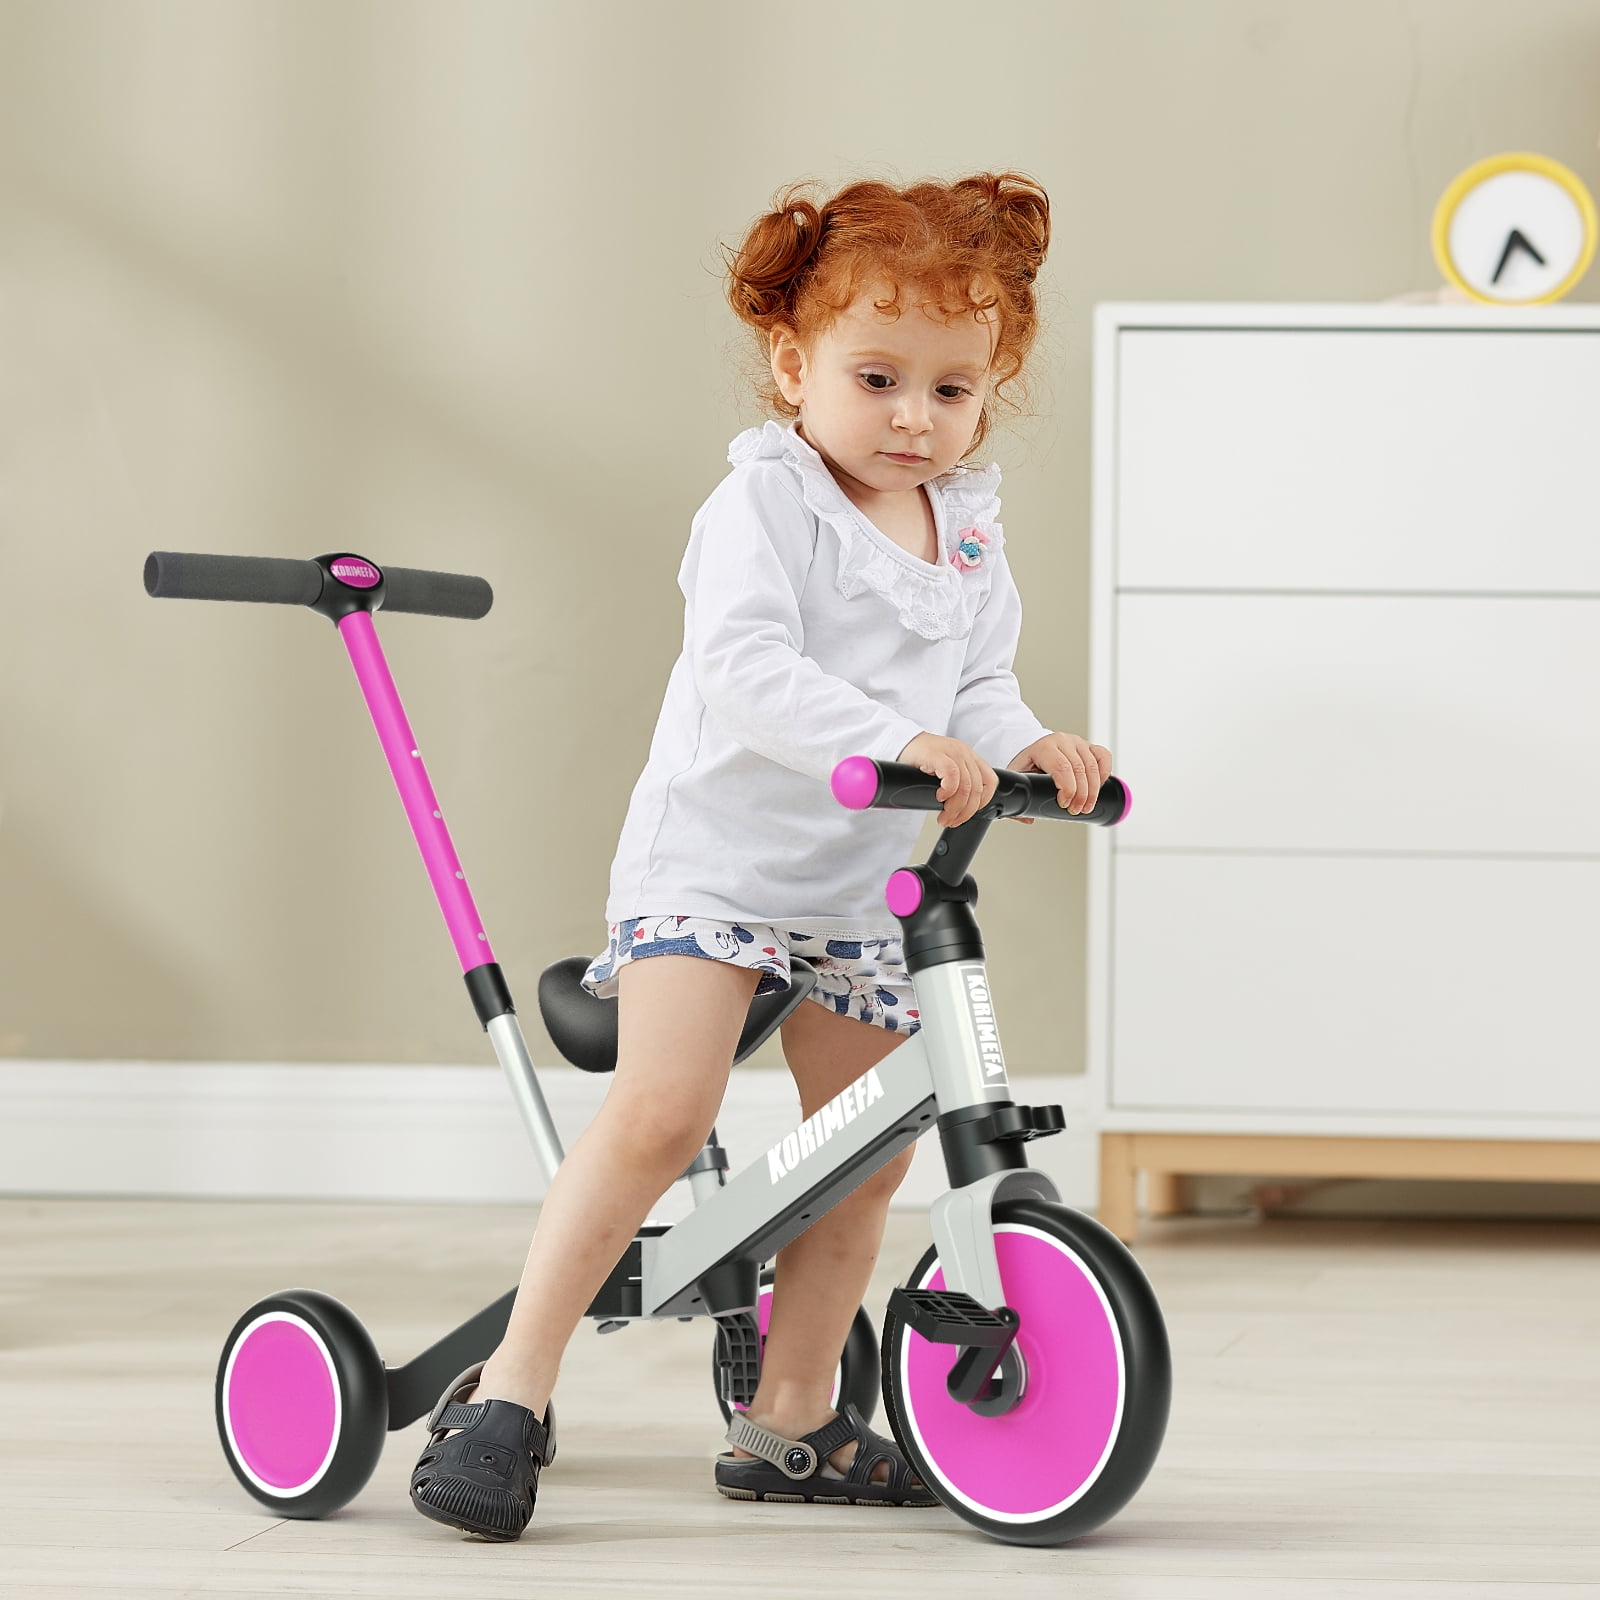 KORIMEFA Toddler Bike with Push Handle, Toddler Tricycle for Age 1 to 3 Years Old Boy Girl, Baby Bike Balance Bike